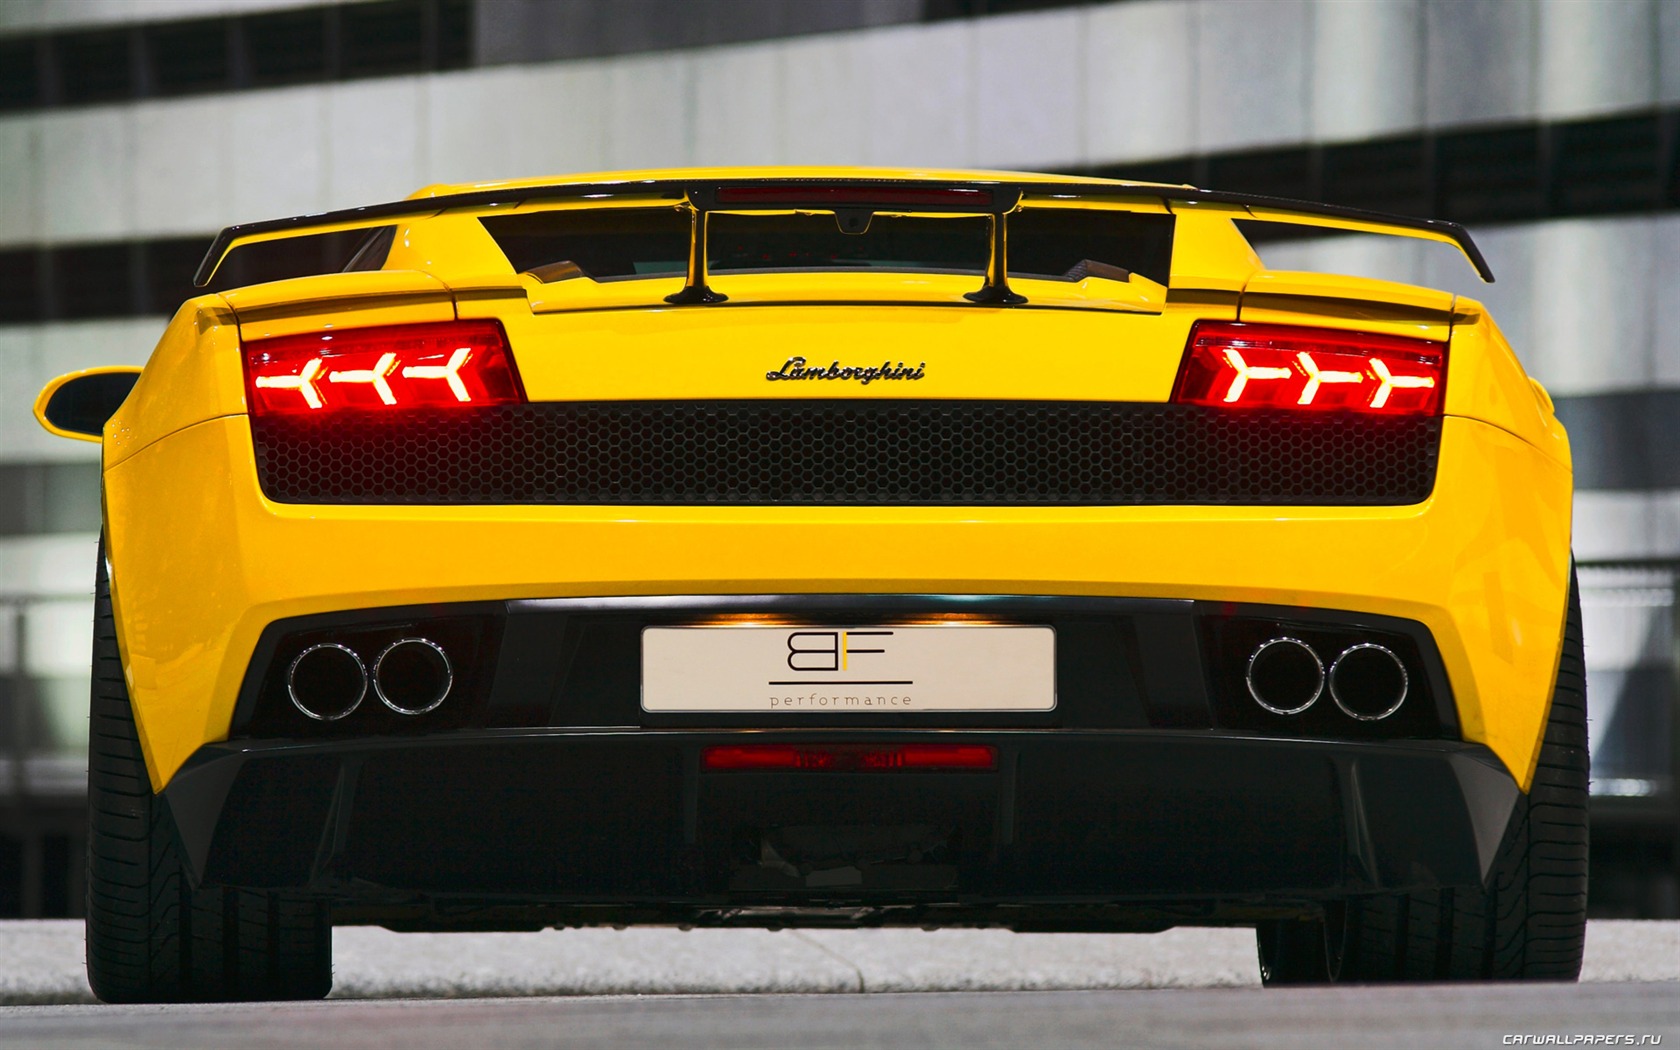 BF performance Lamborghini Gallardo GT600 - 2010 蘭博基尼 #5 - 1680x1050